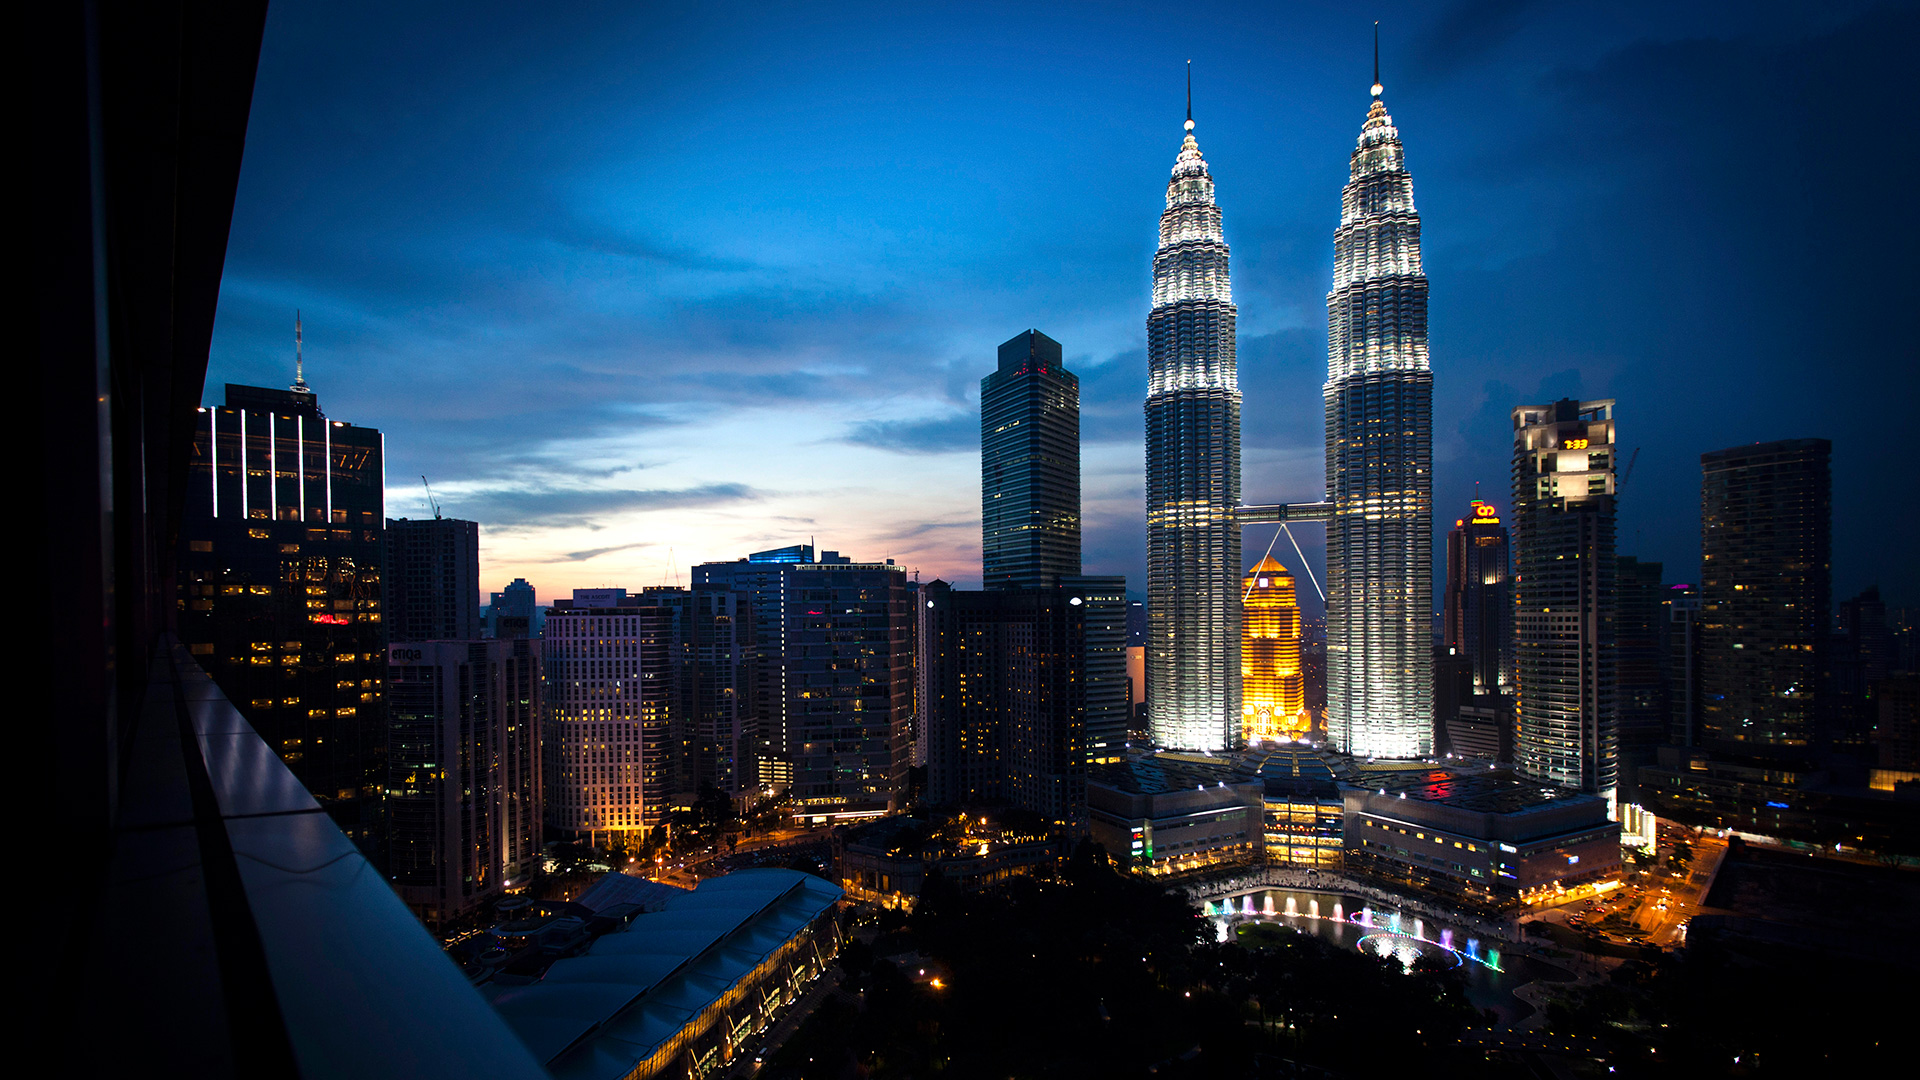 Kuala Lumpur, the capital city of Malaysia